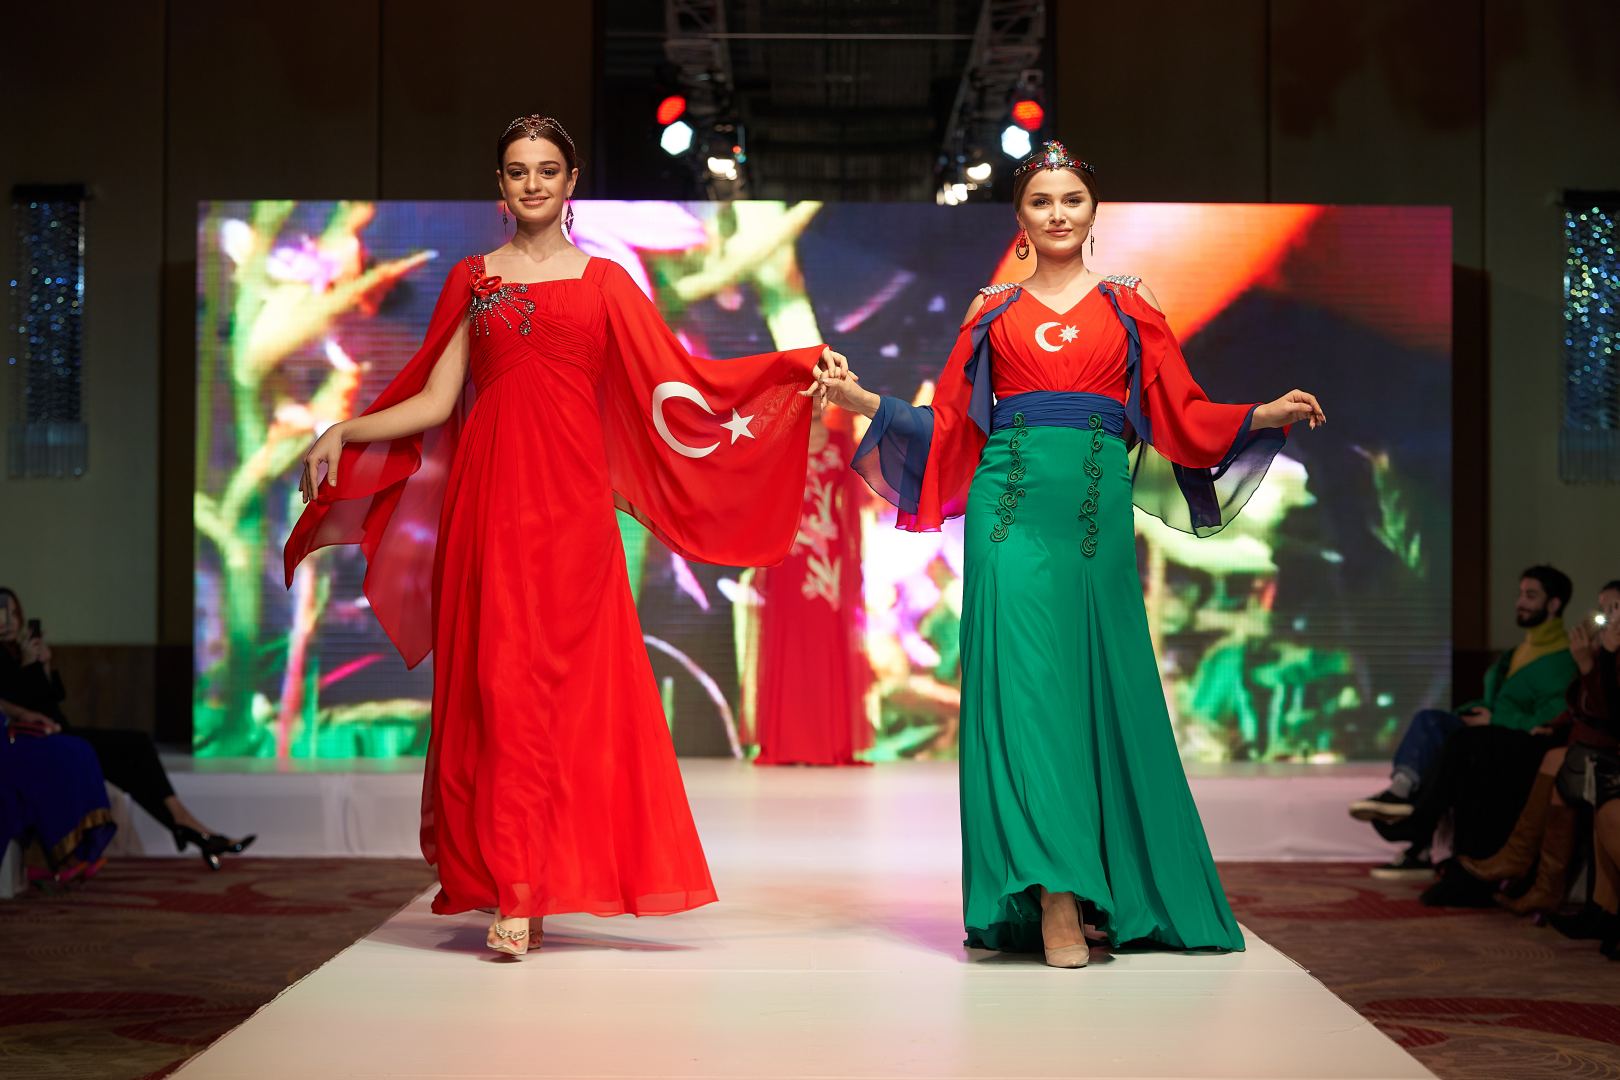 Azerbaijan Fashion Week  - вечерние и свадебные платья, харыбюльбюль, эклектика, ready-to-wear…  (ФОТО)